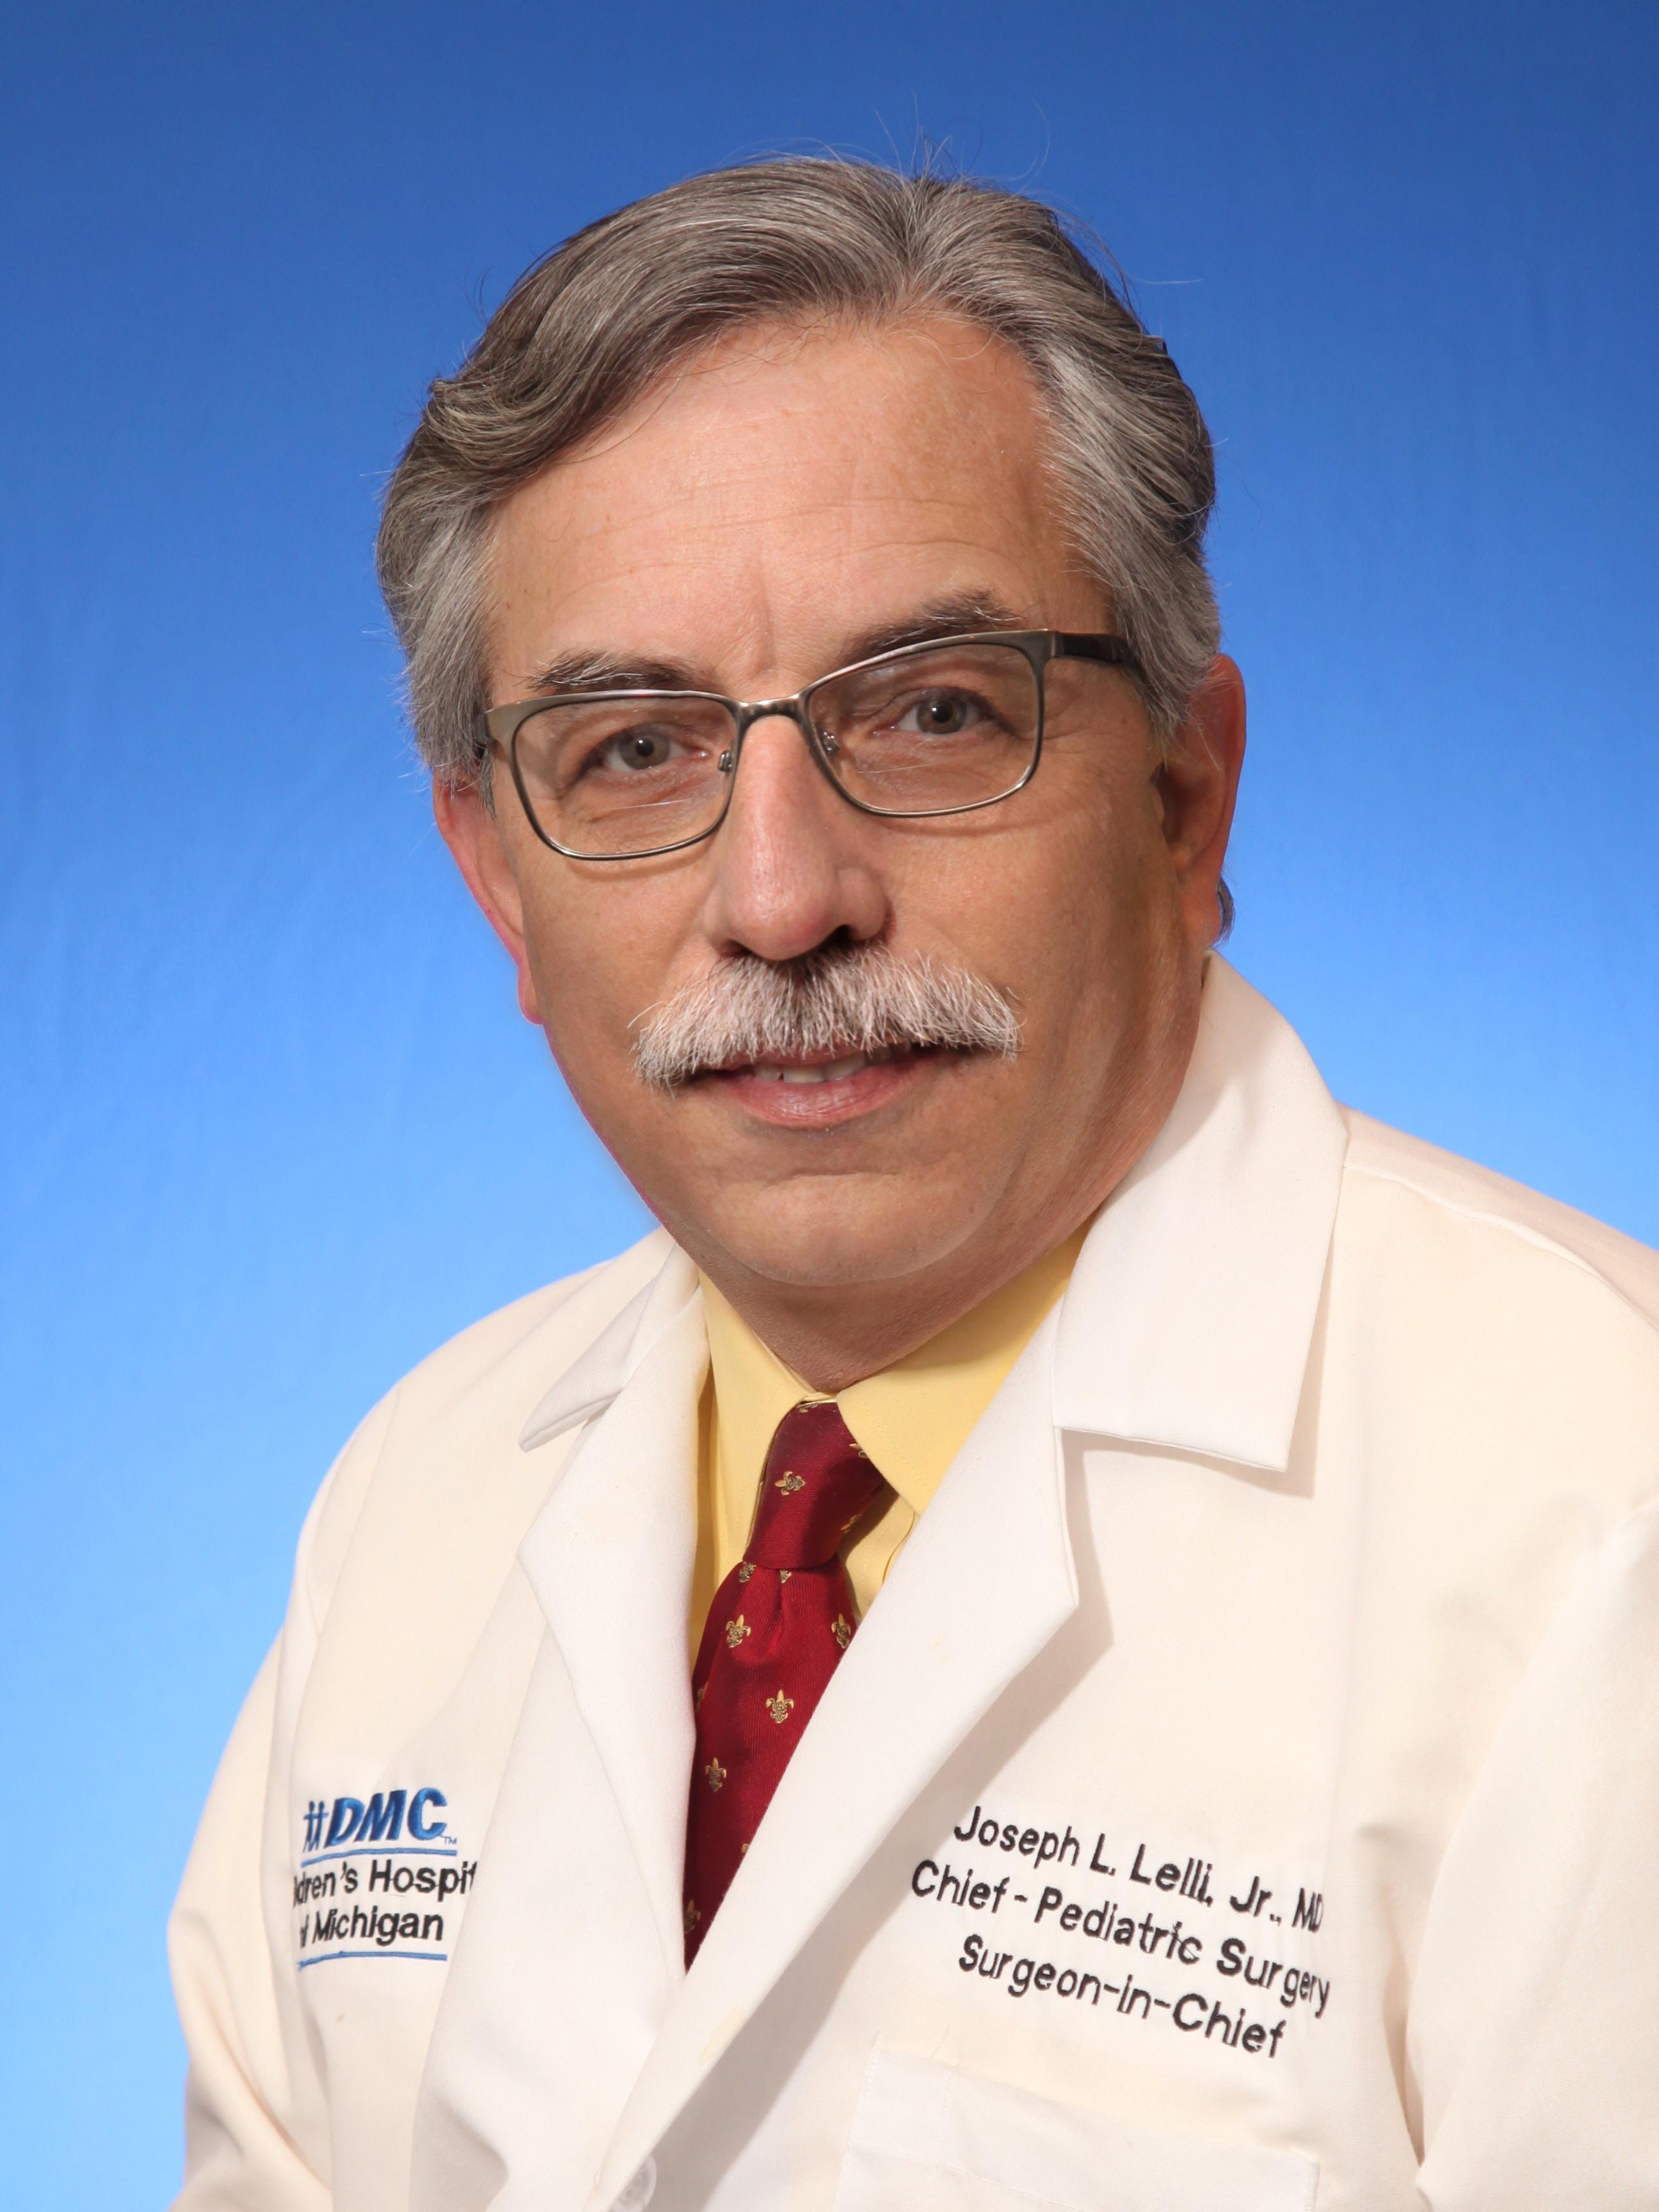 Dr. Joseph Lelli Jr., DM